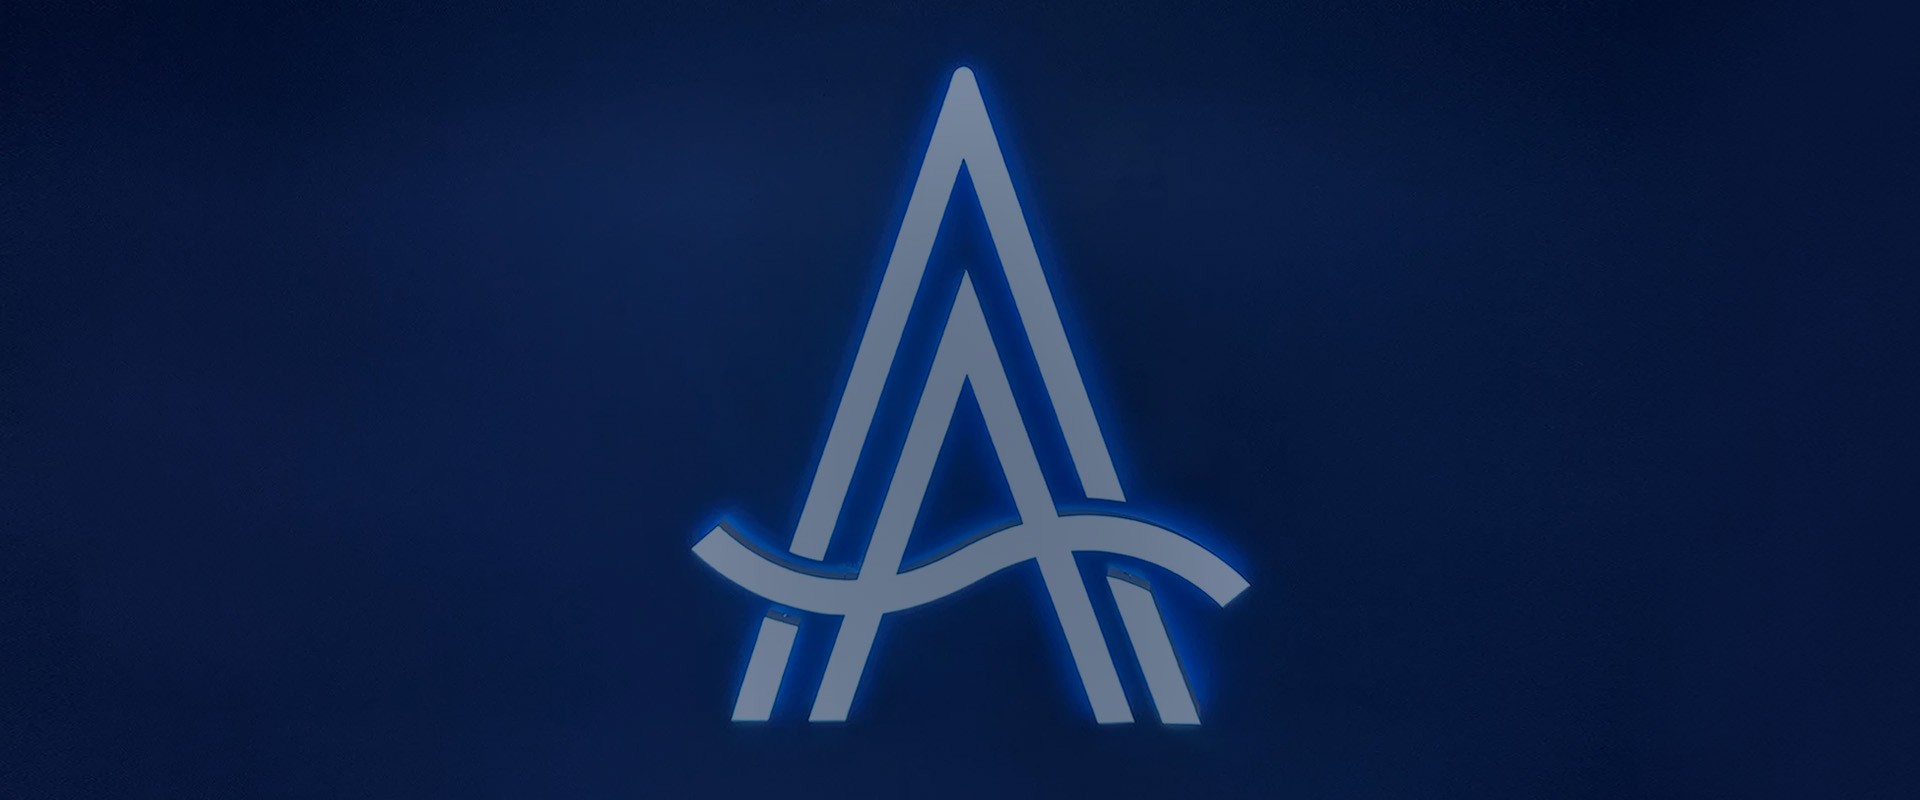 Close up shot of the SAAAC Autism Centre 'A' logo